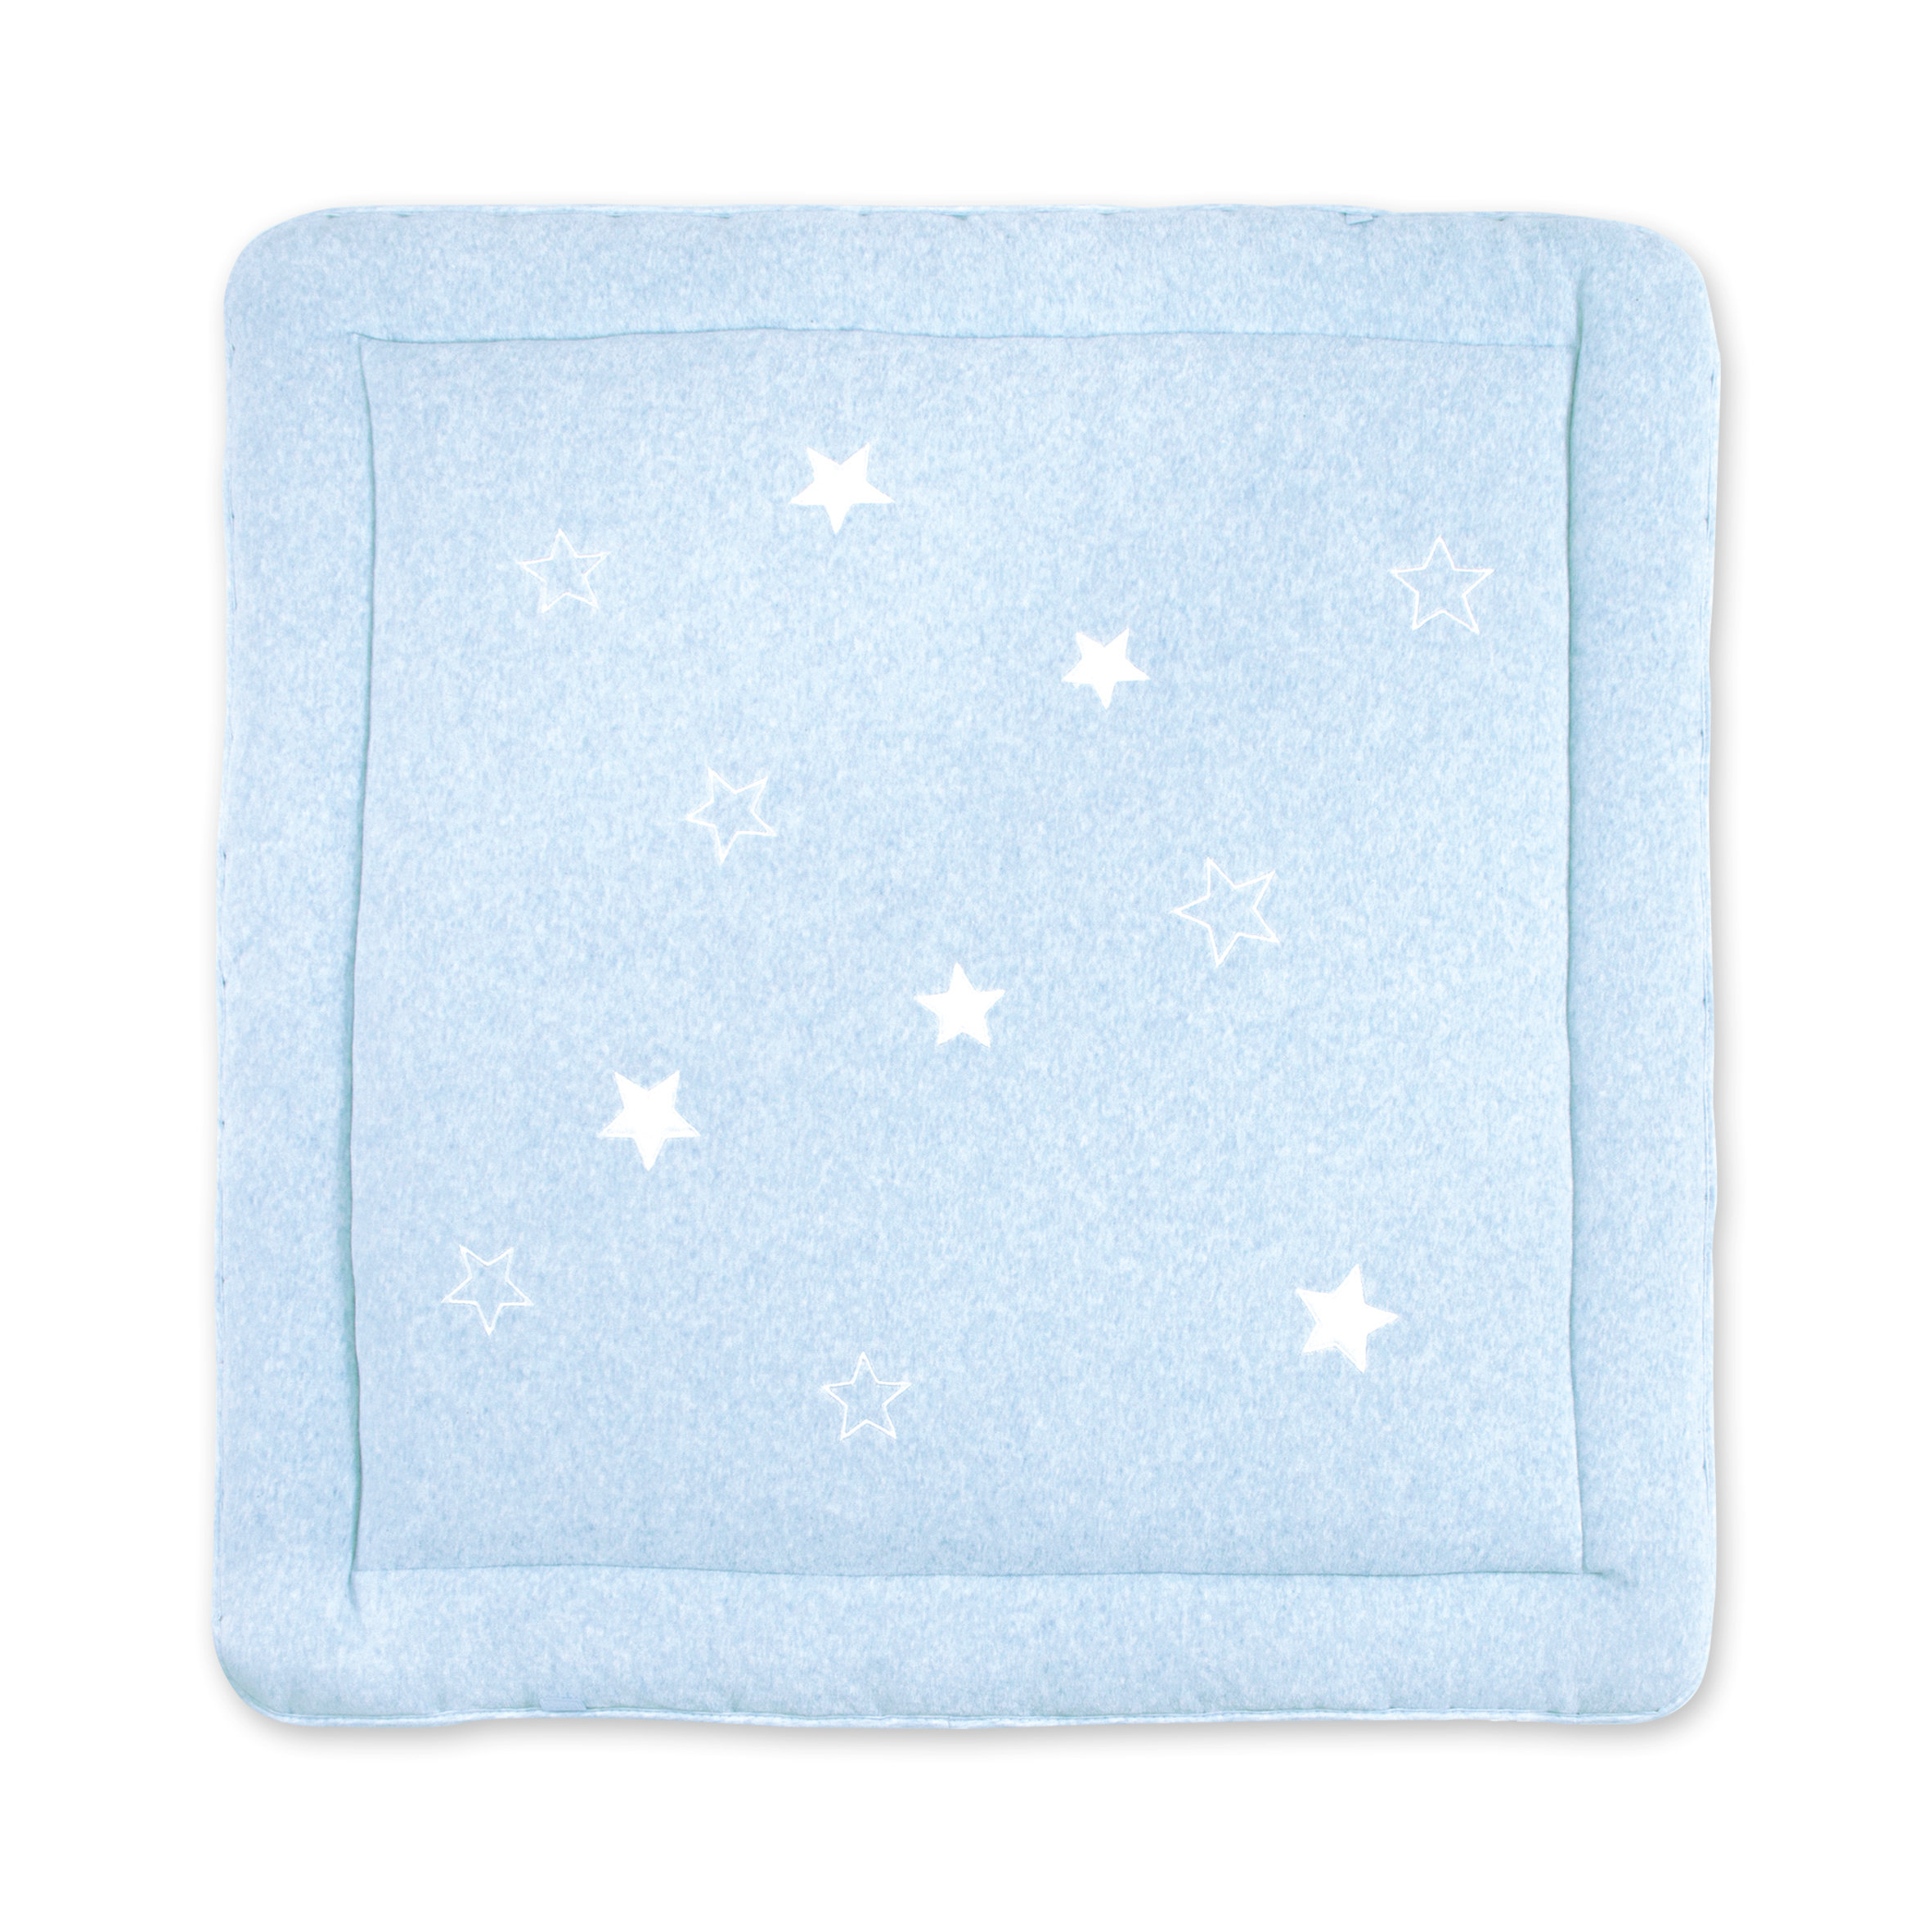 Playpen mat Pady terry + terry 100x100cm STARY Stars print light blue